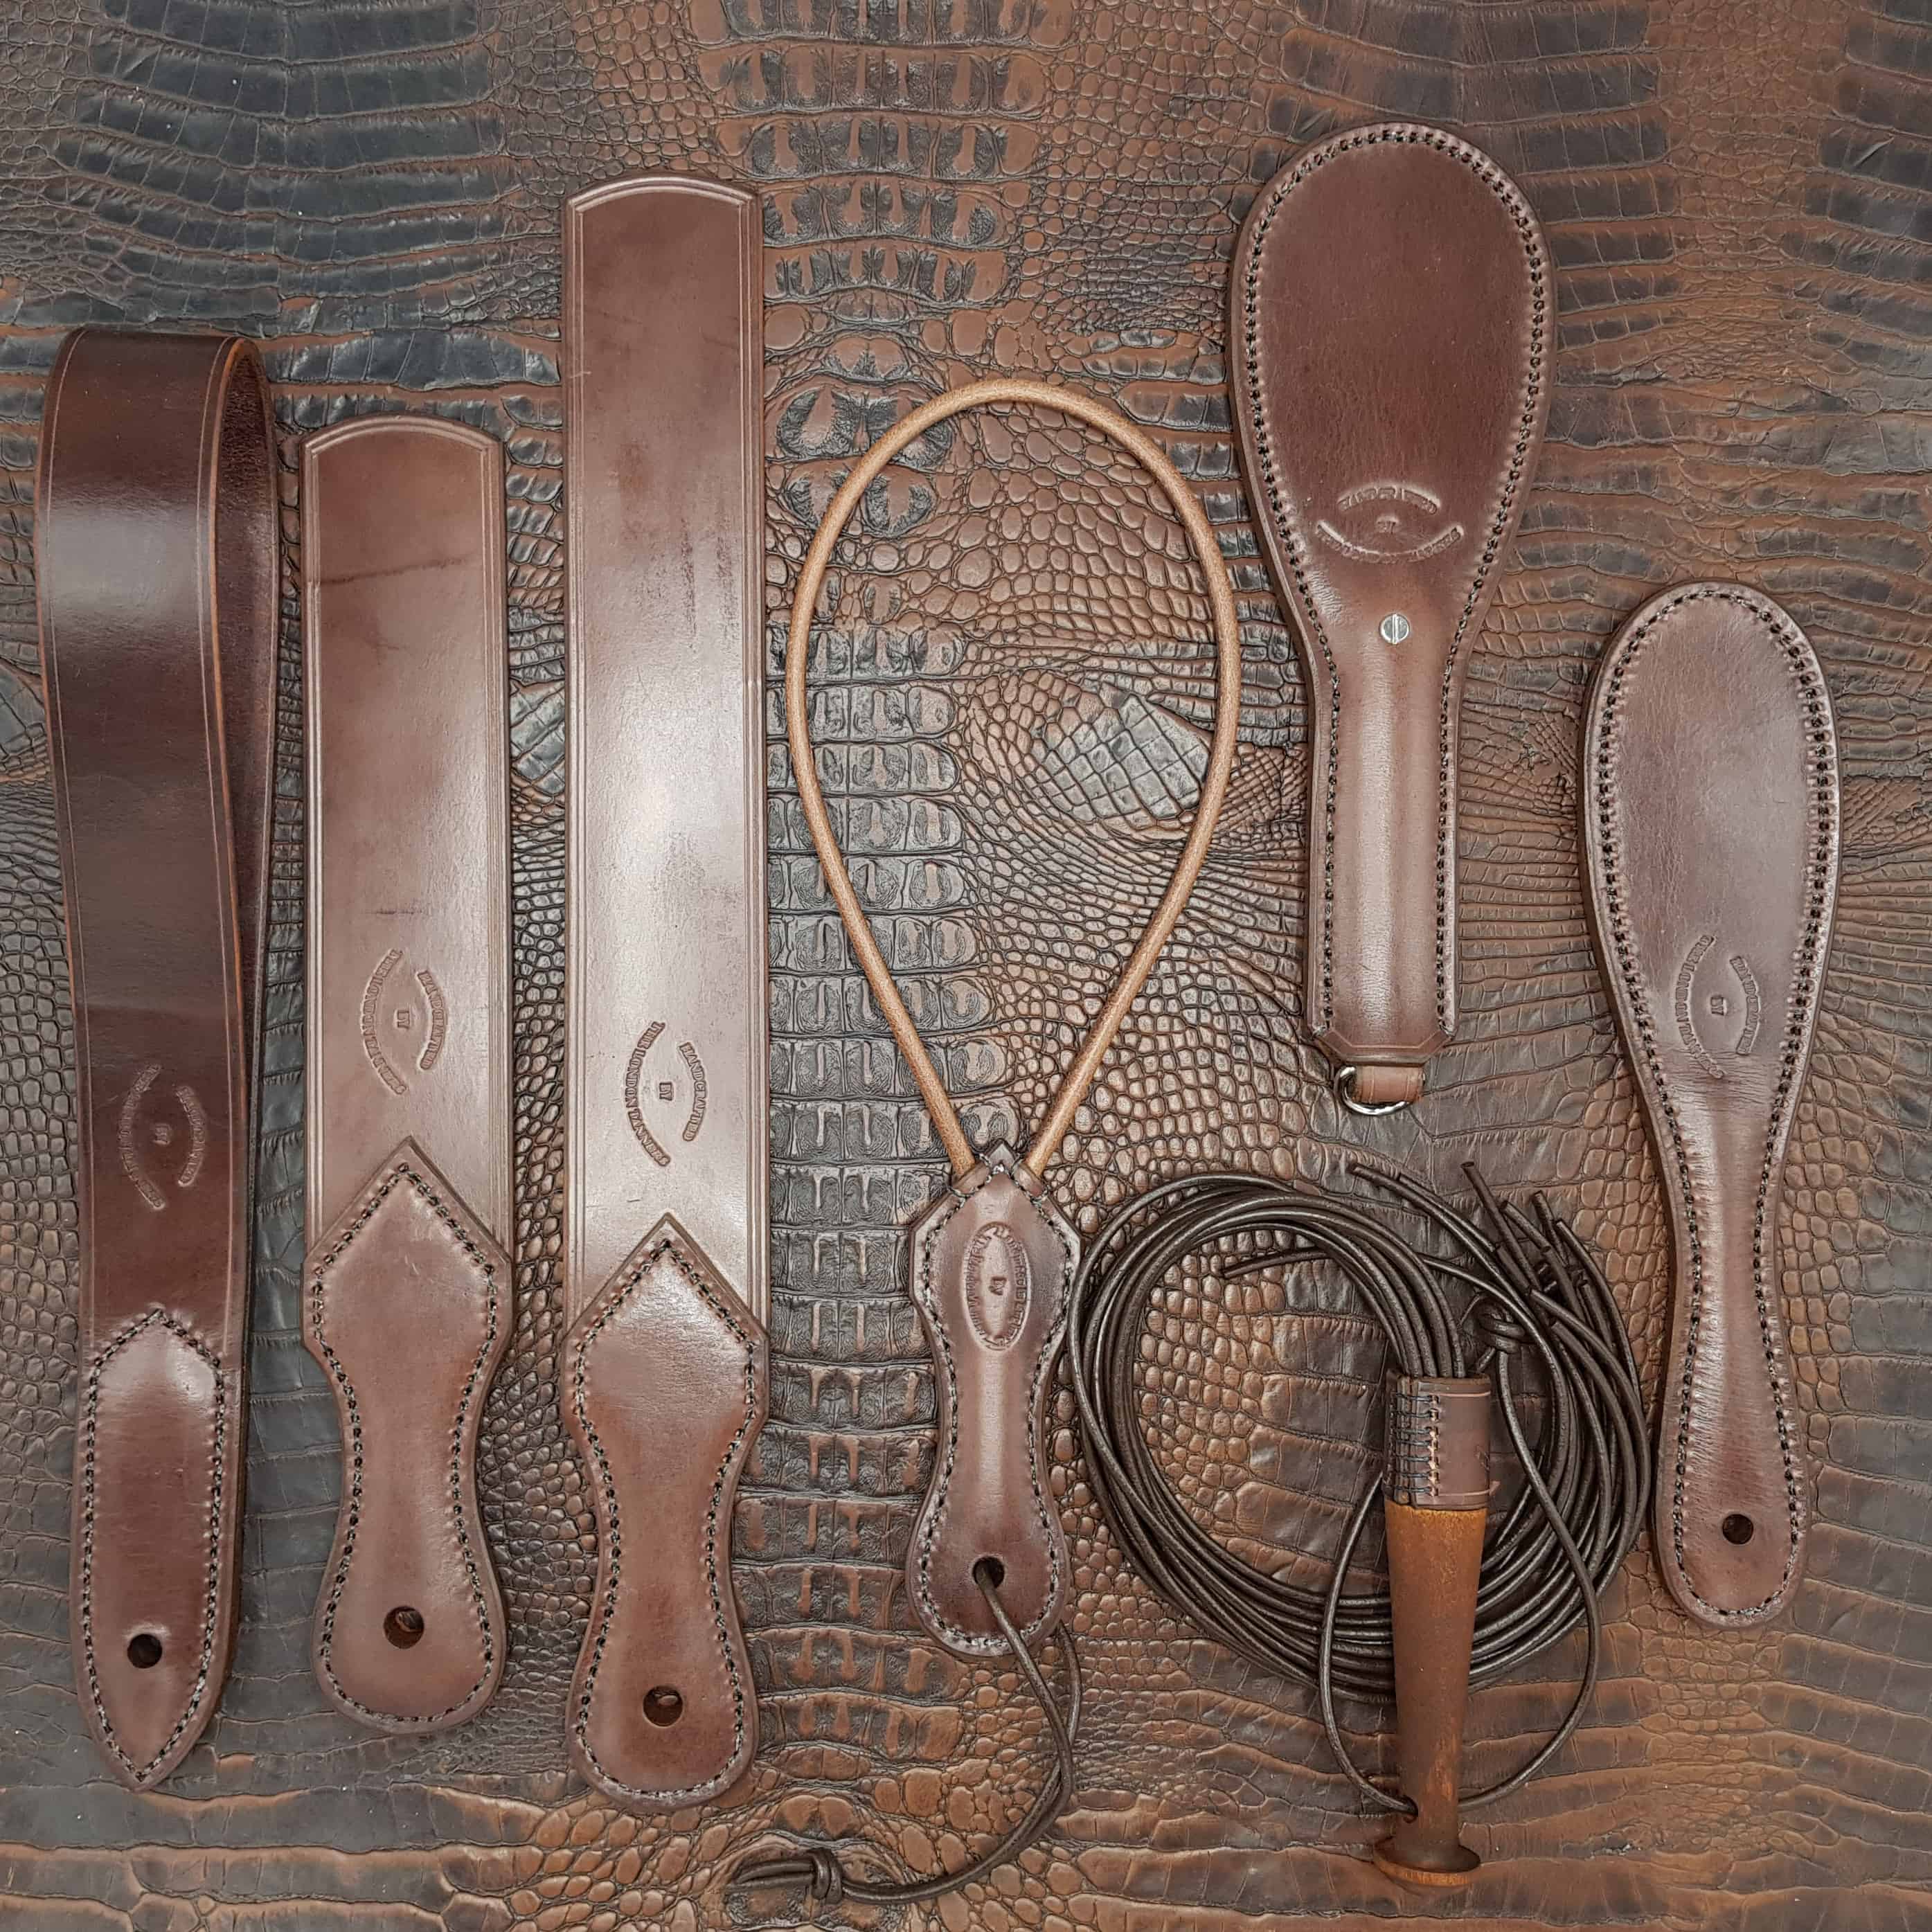 Leather strap discipline